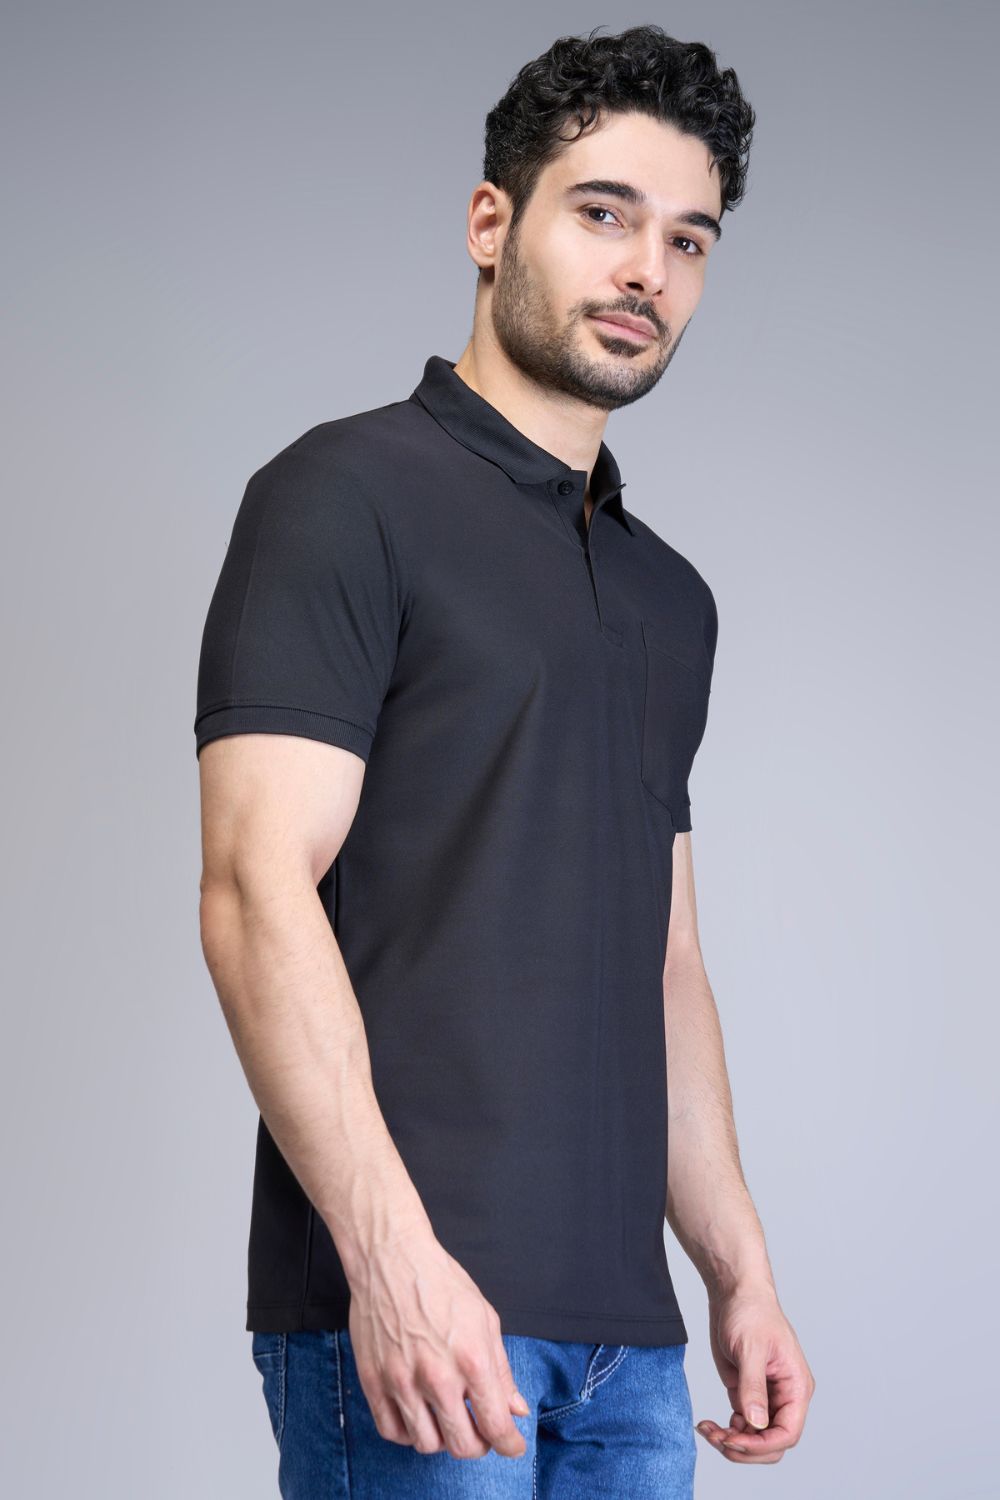 Black Smart Tech Pocket + Polo T-shirts Maxzone Clothing   